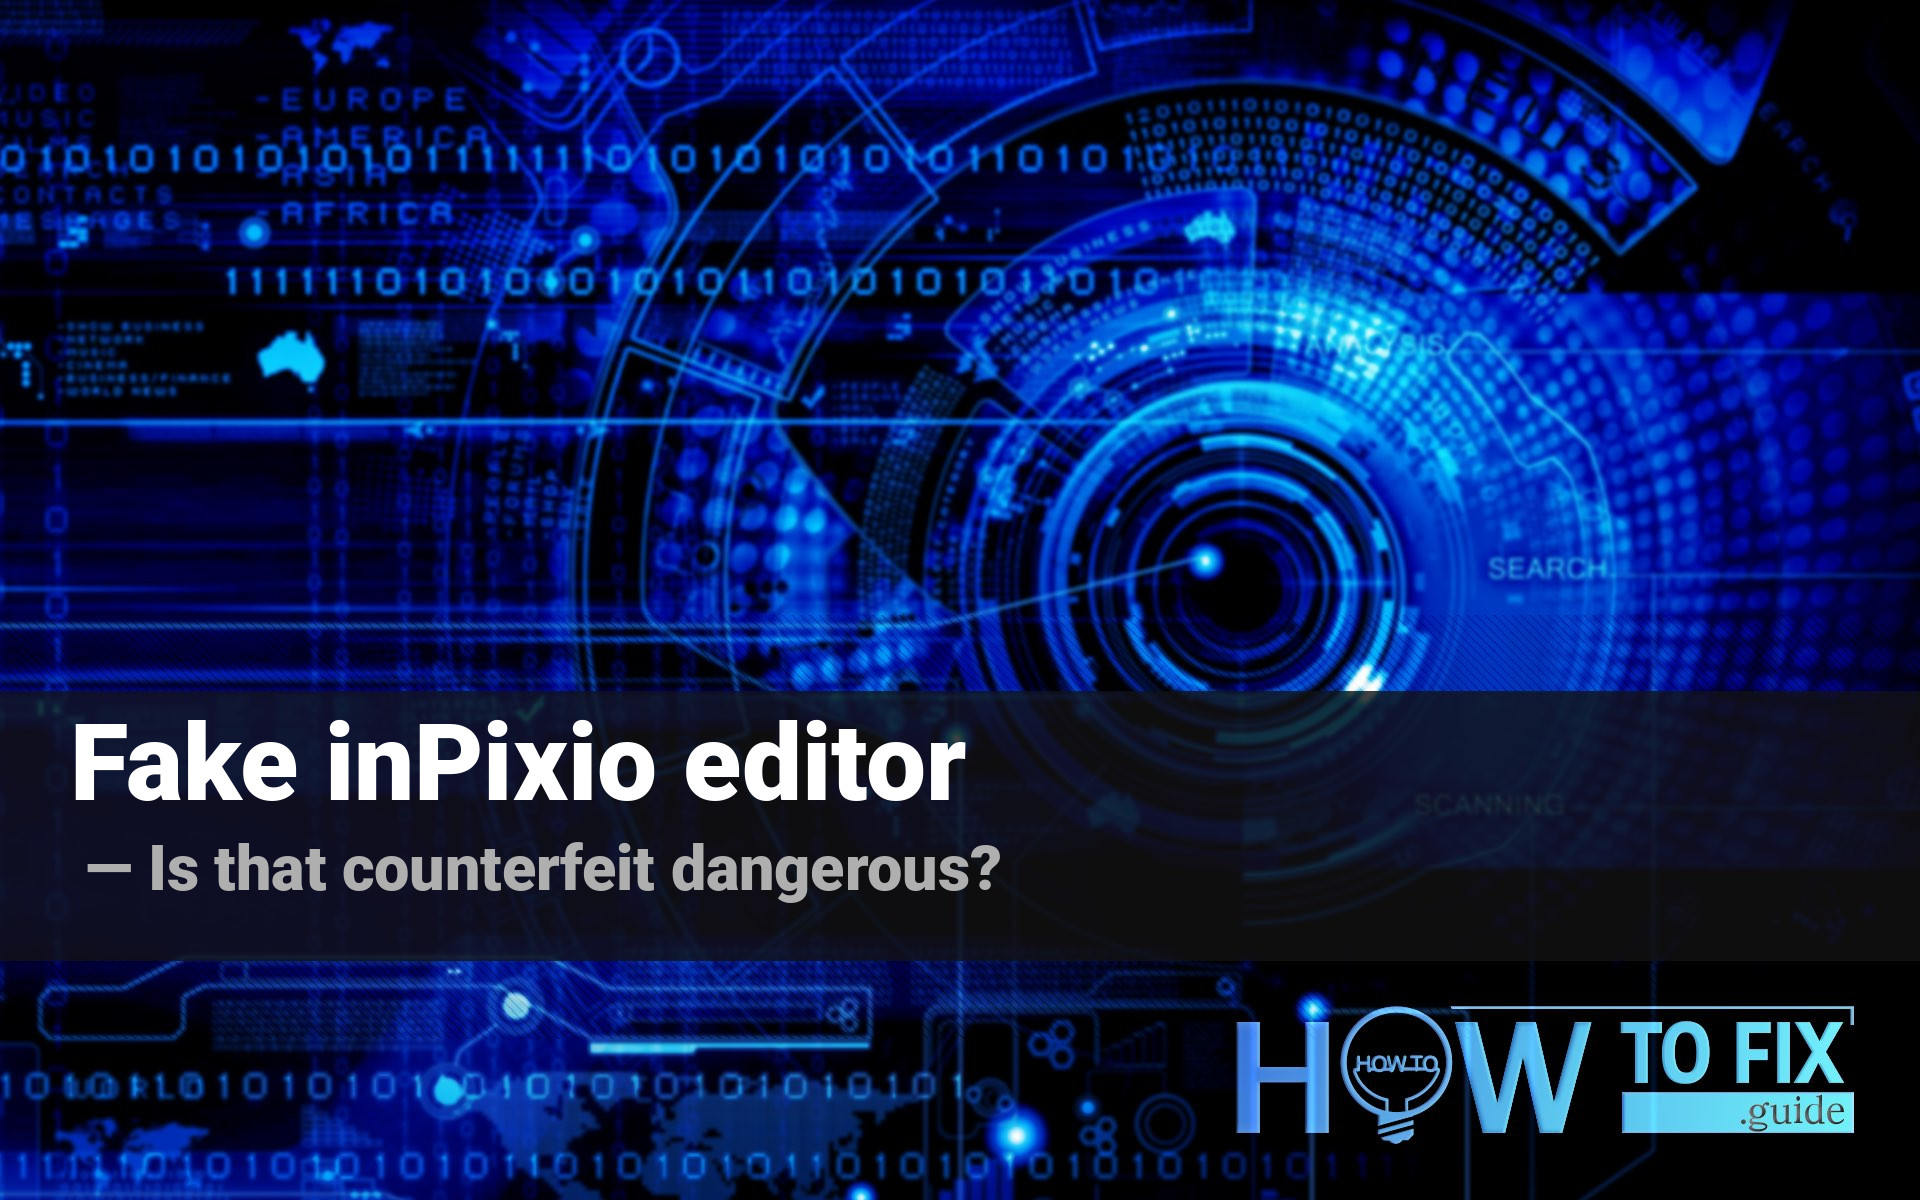 Fake inPixio Editor – is it dangerous?